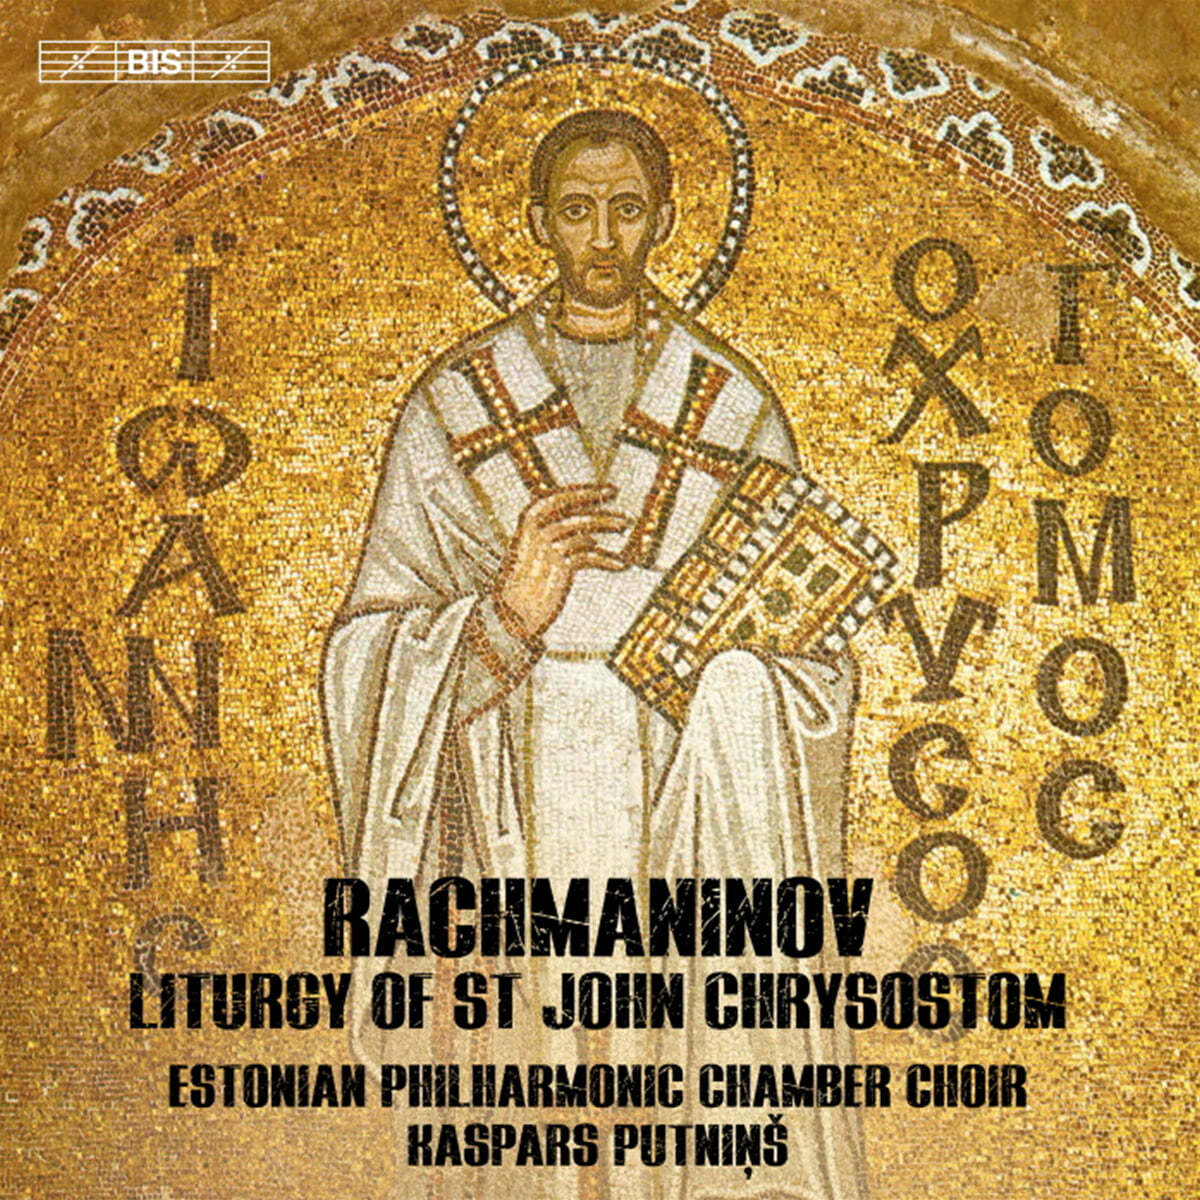 Estonian Philharmonic Chamber Choir 라흐마니노프: 성 요한 크리소스토모스 전례 (Rachmaninov: Liturgy of St. John Chrysostom Op.31)